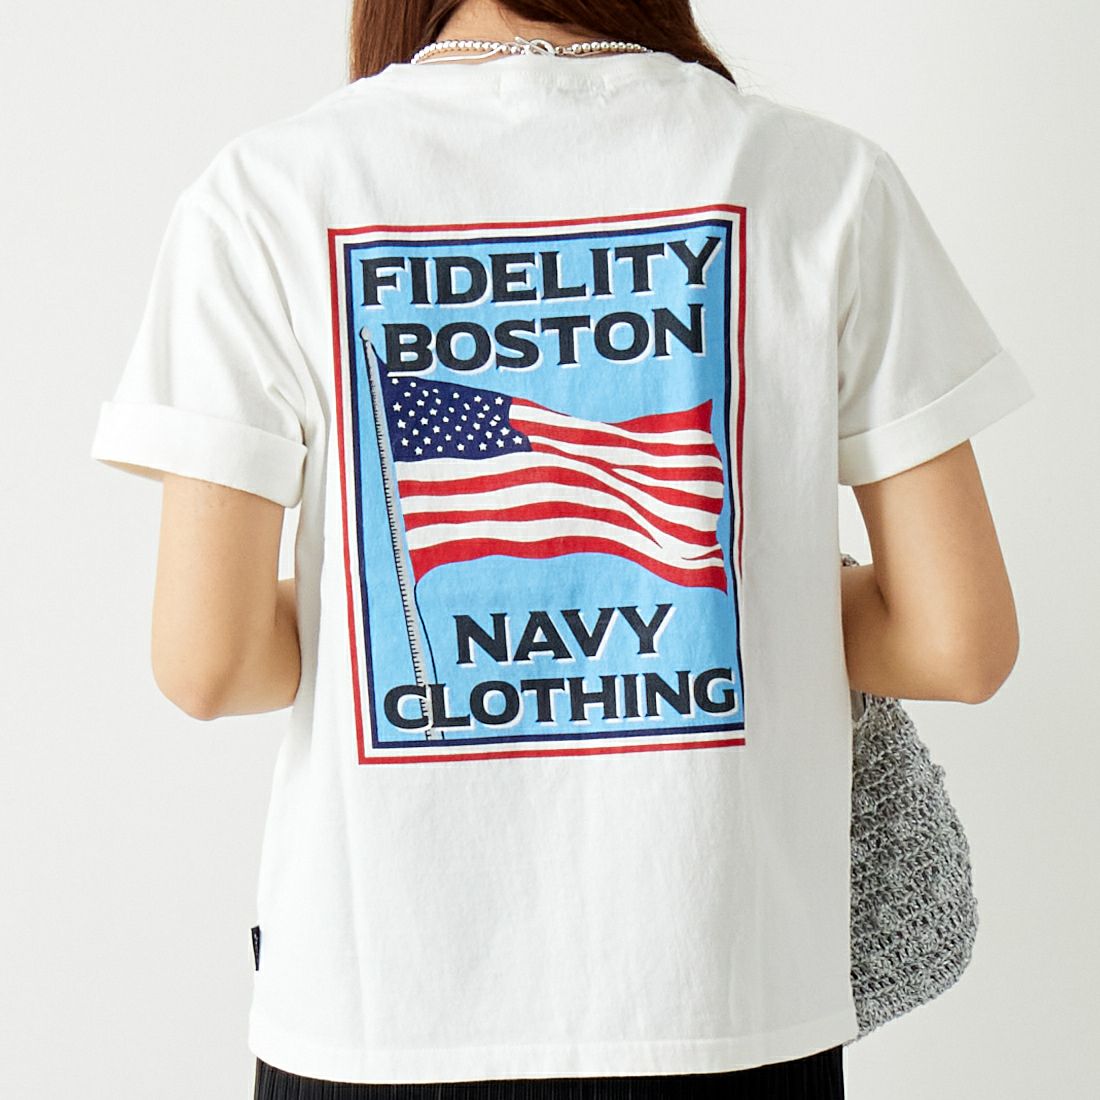 FIDELITY [フィデリティ] ポスターアートプリントTシャツ [FH-24575405] 06 OFF WHI